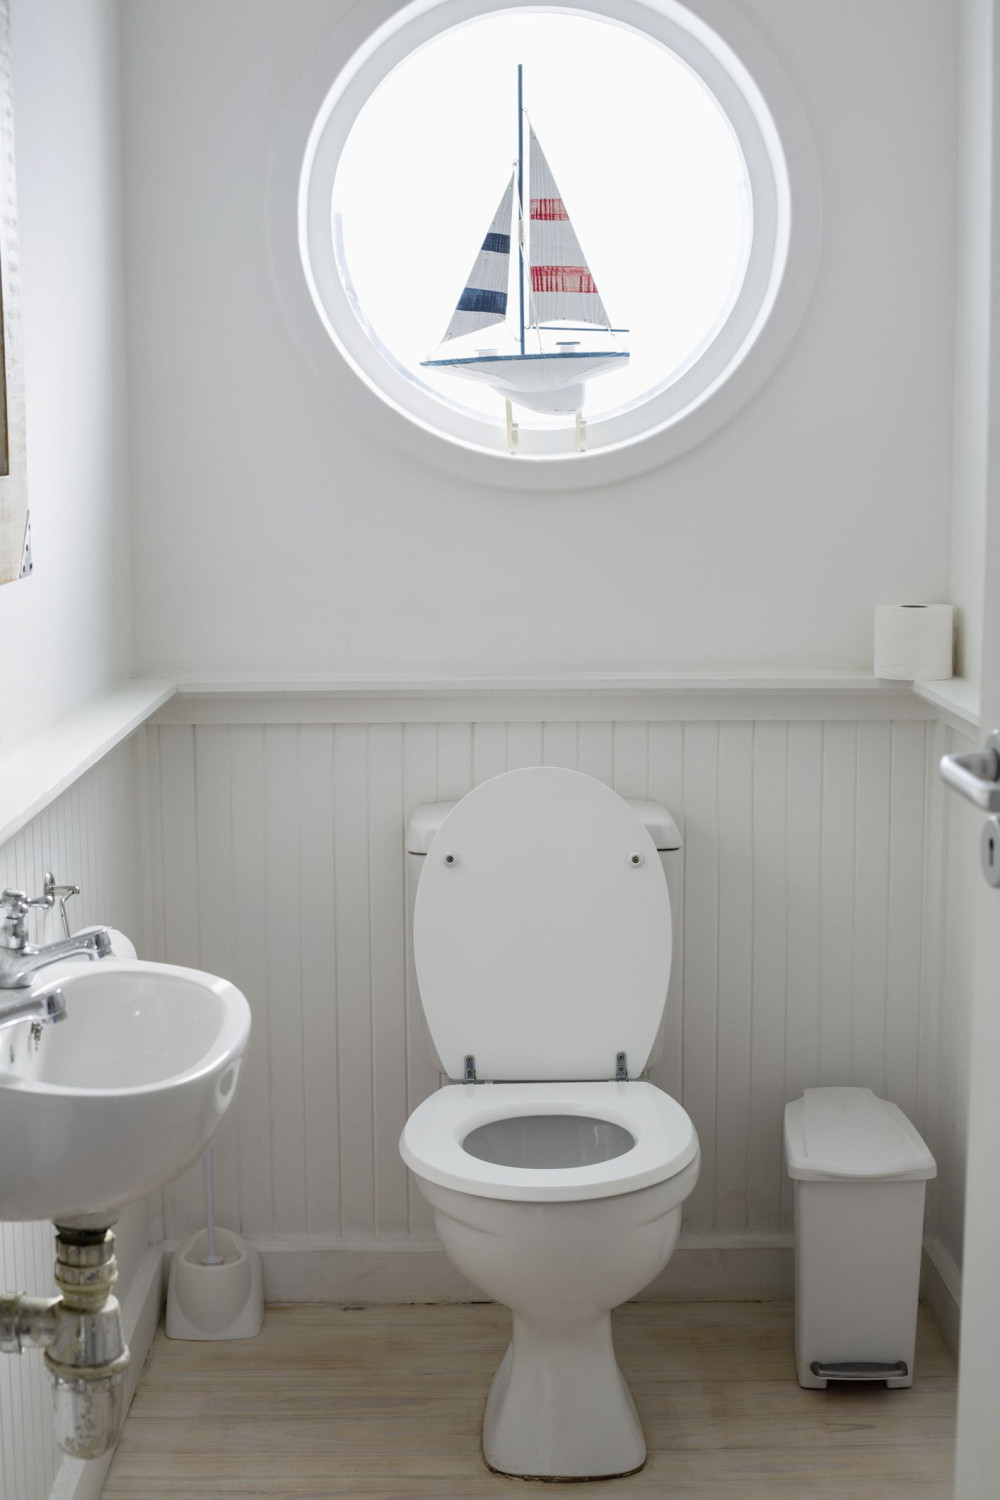 Half-Bath Ideas That Help the Bathroom Stand Out